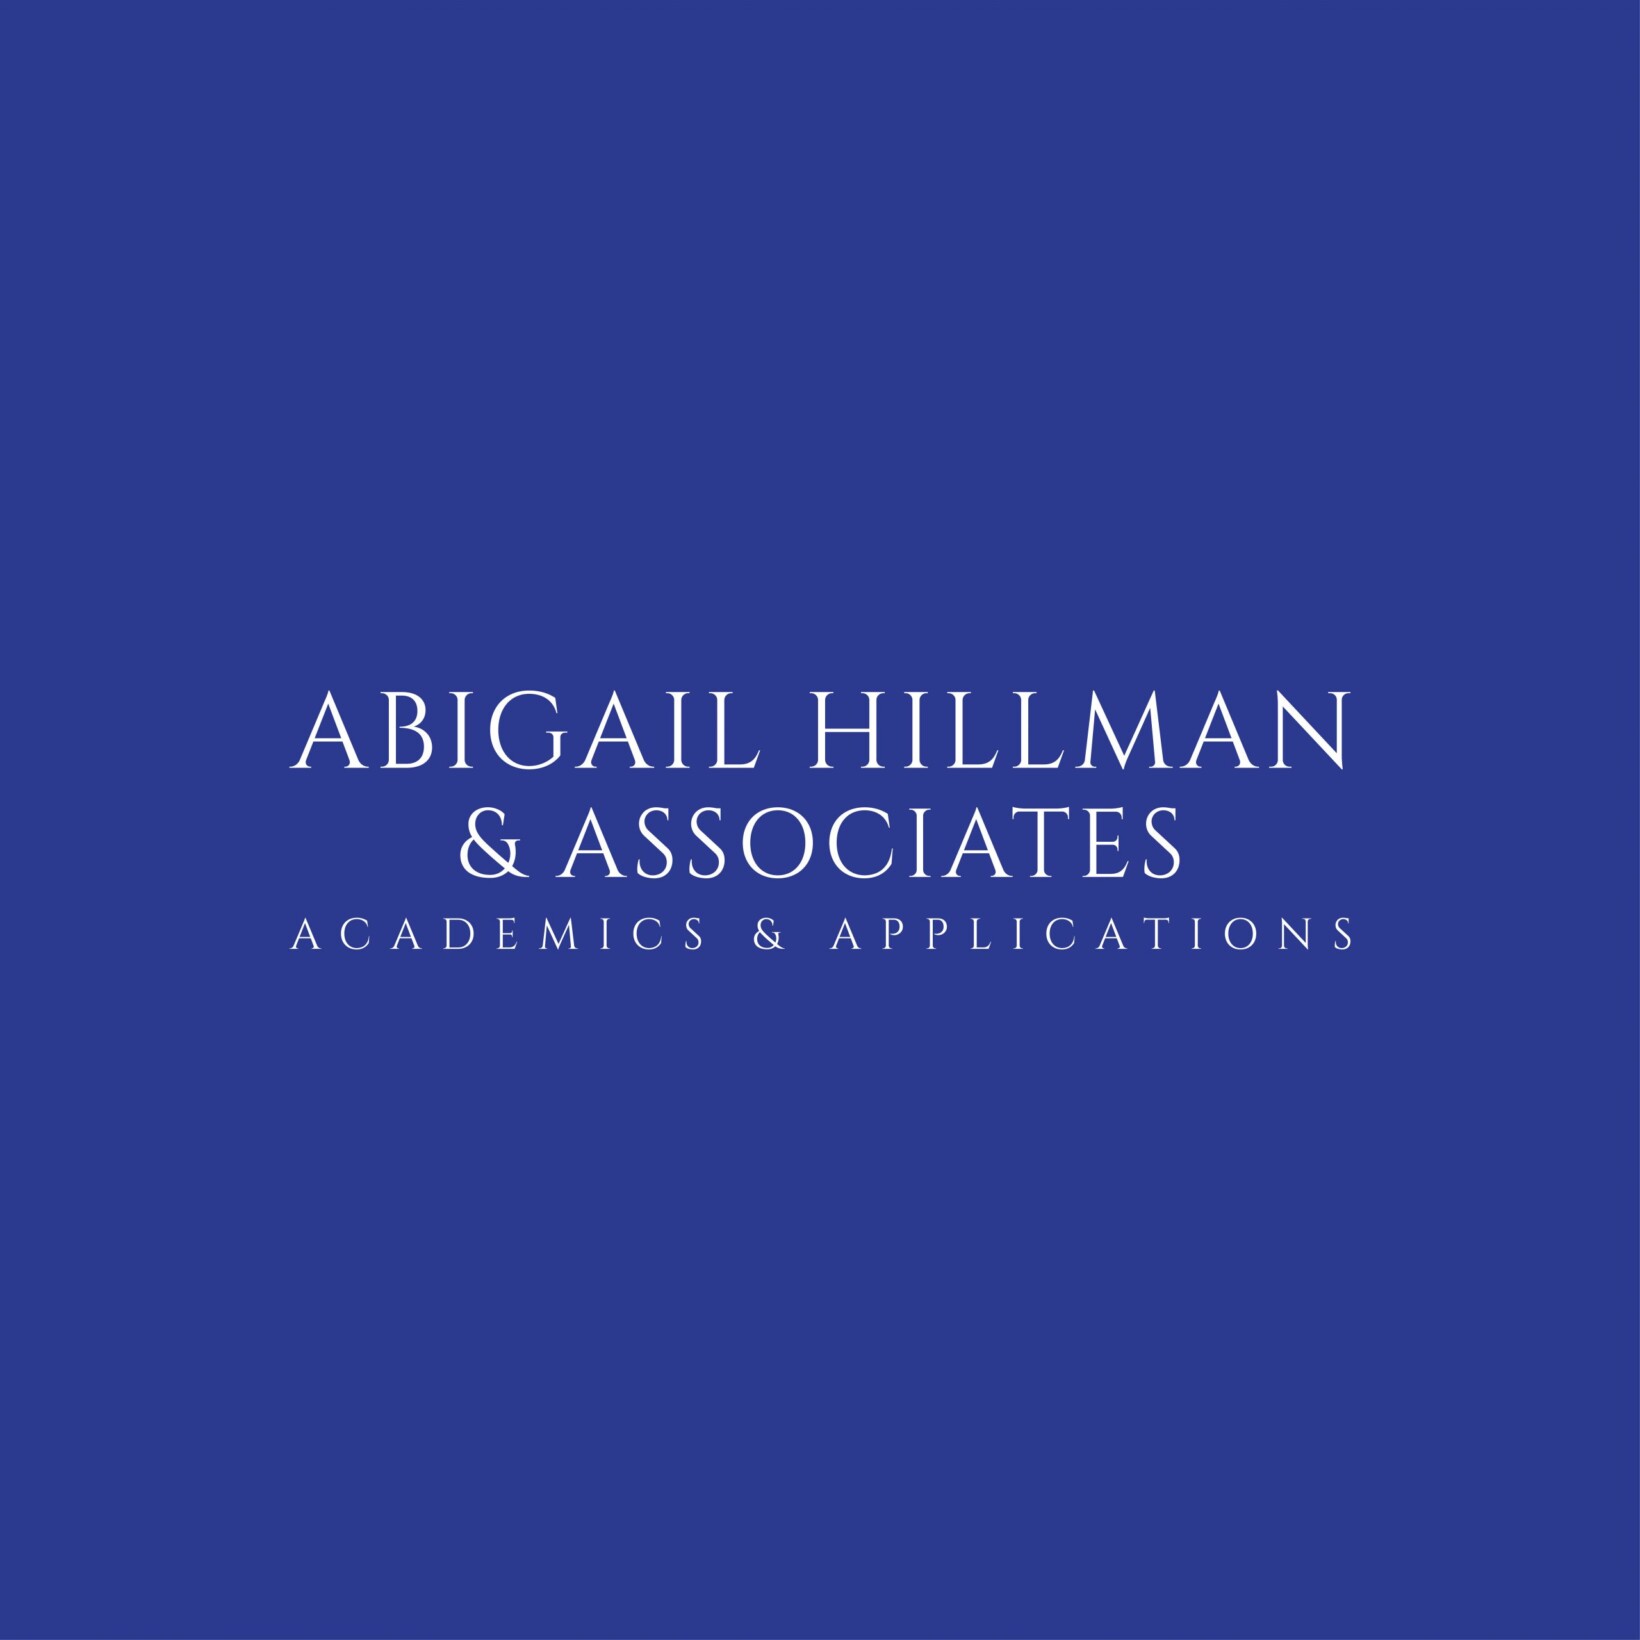 Abigail Hillman and Associates